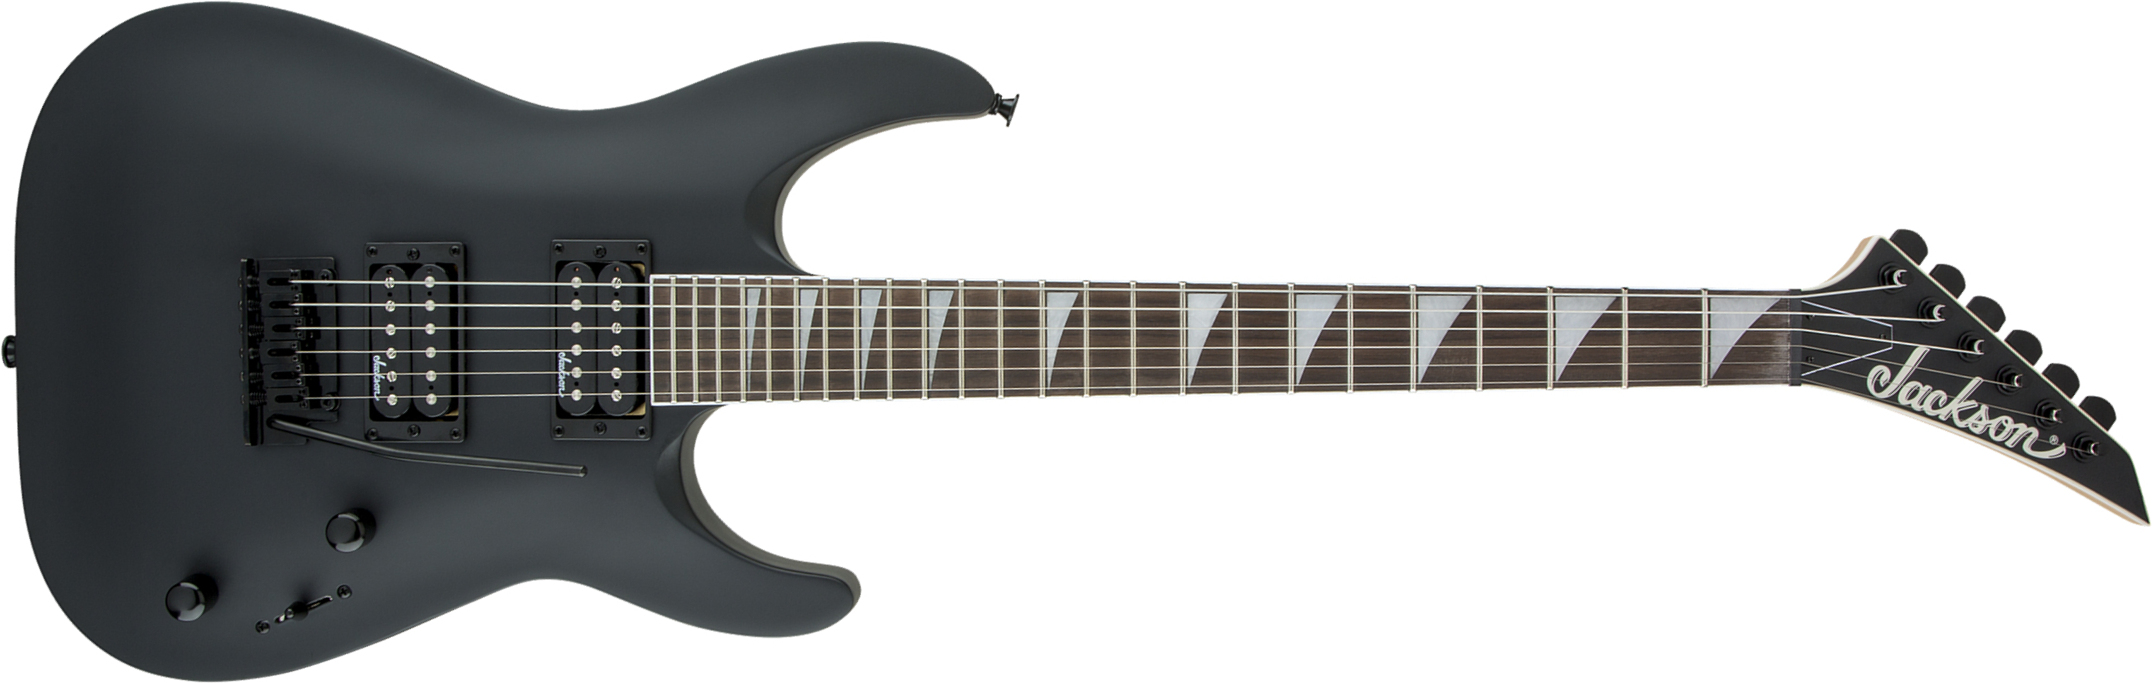 Jackson Dinky Arch Top Dka Js22 2h Trem Ama - Satin Black - Metal electric guitar - Main picture